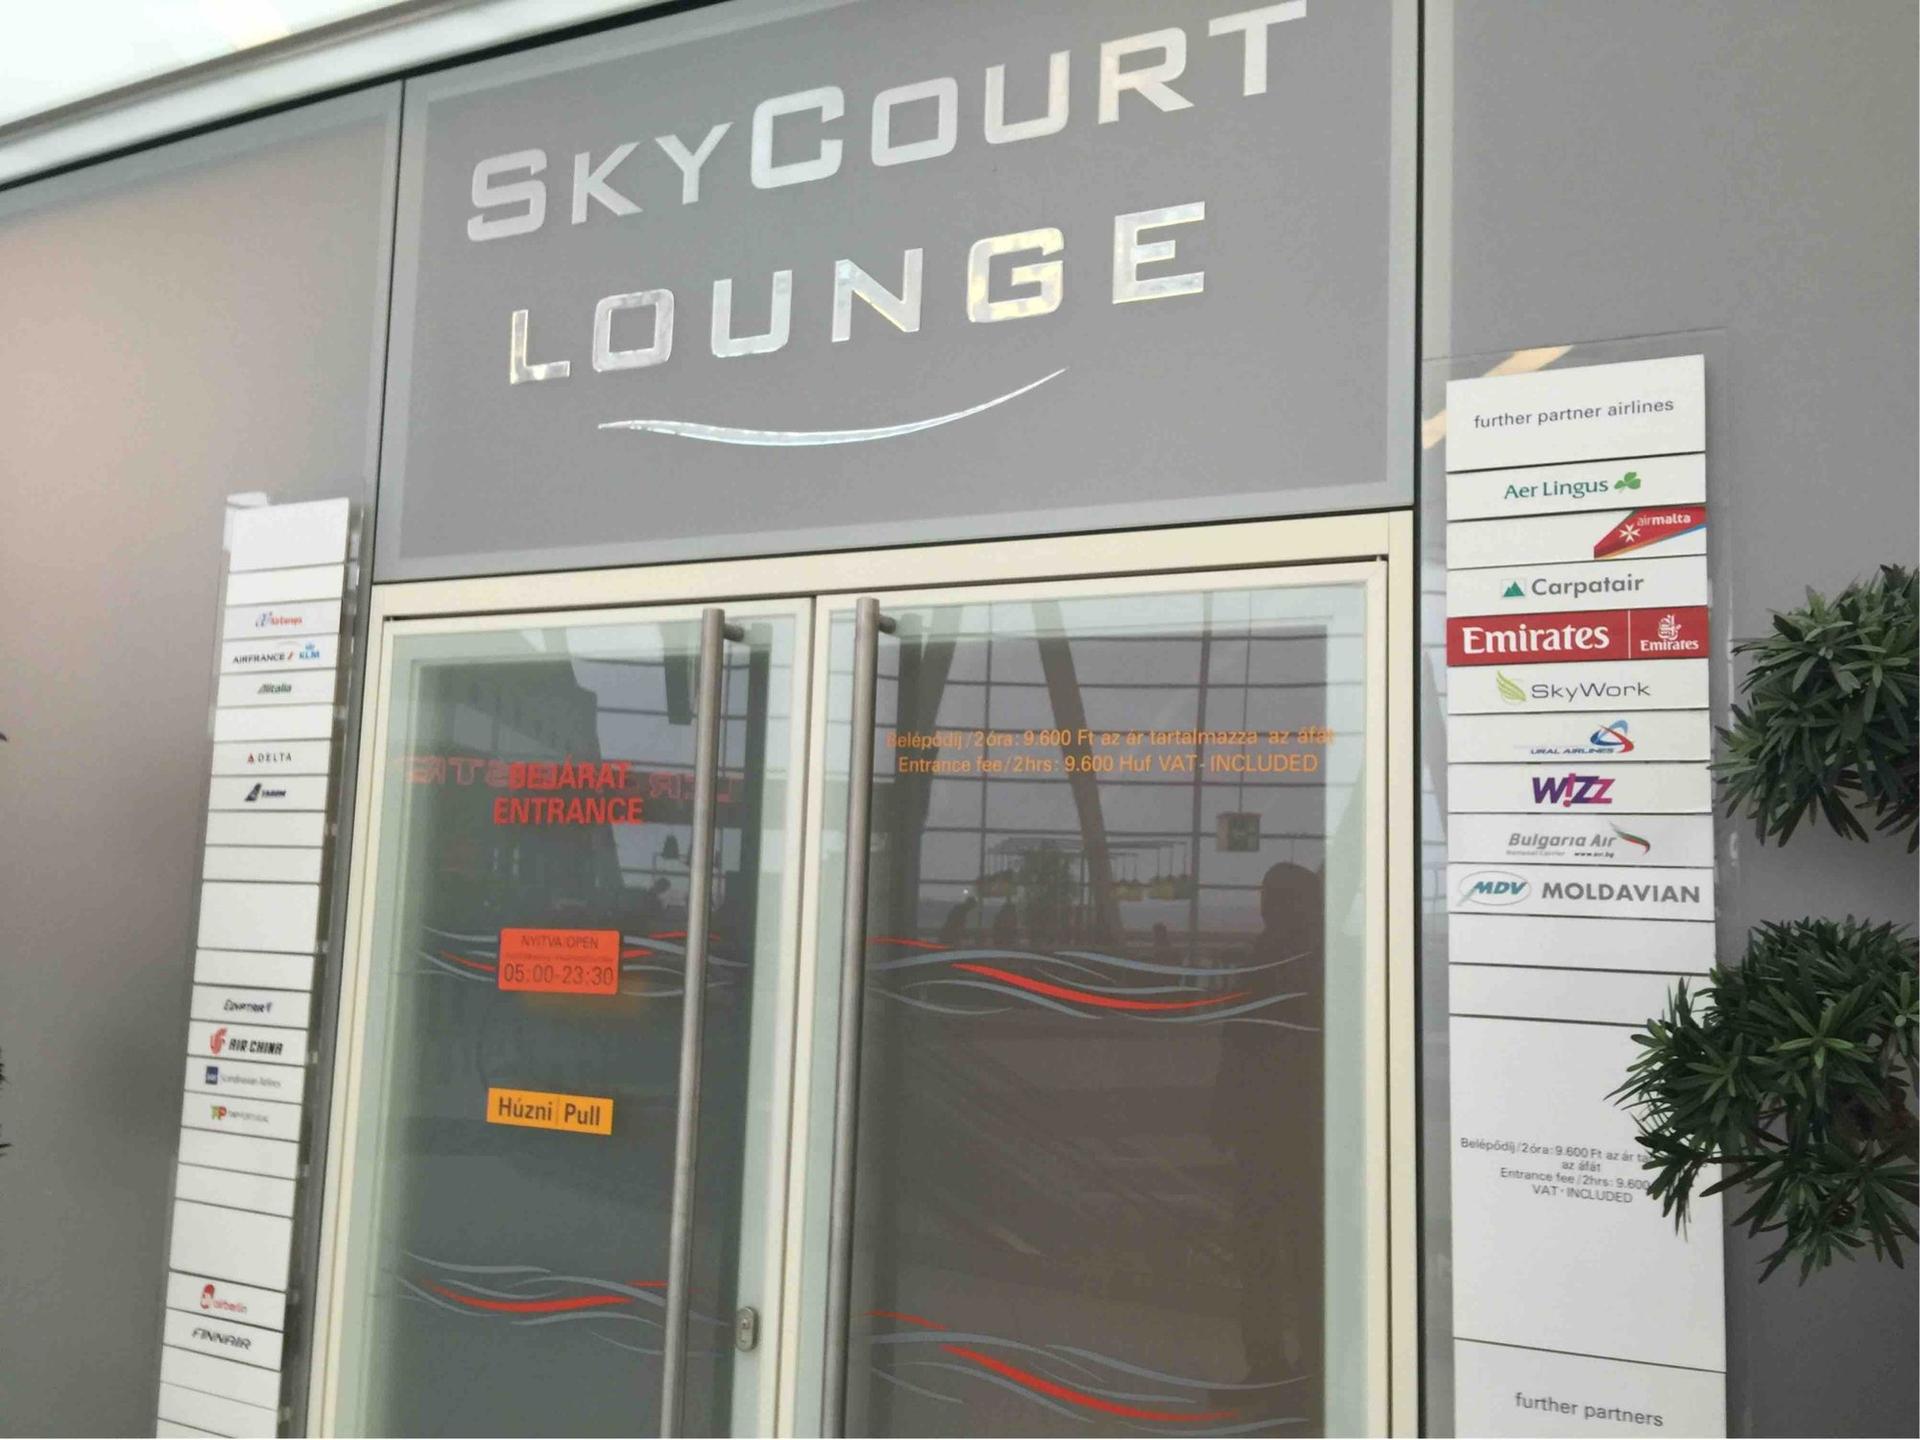 SkyCourt Lounge image 11 of 23